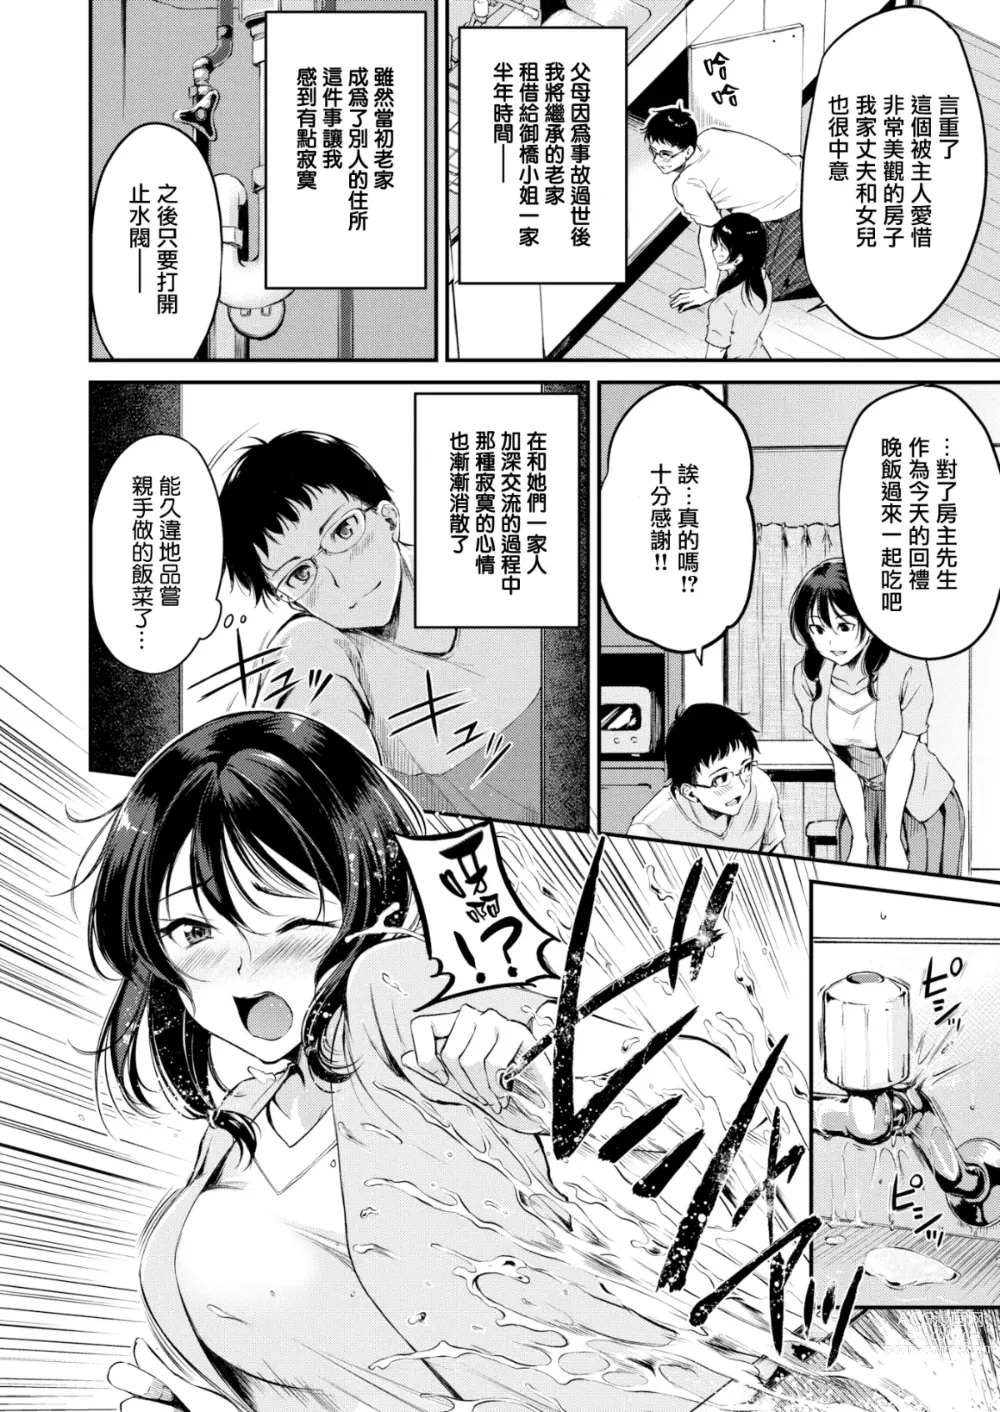 Page 2 of manga Karimono